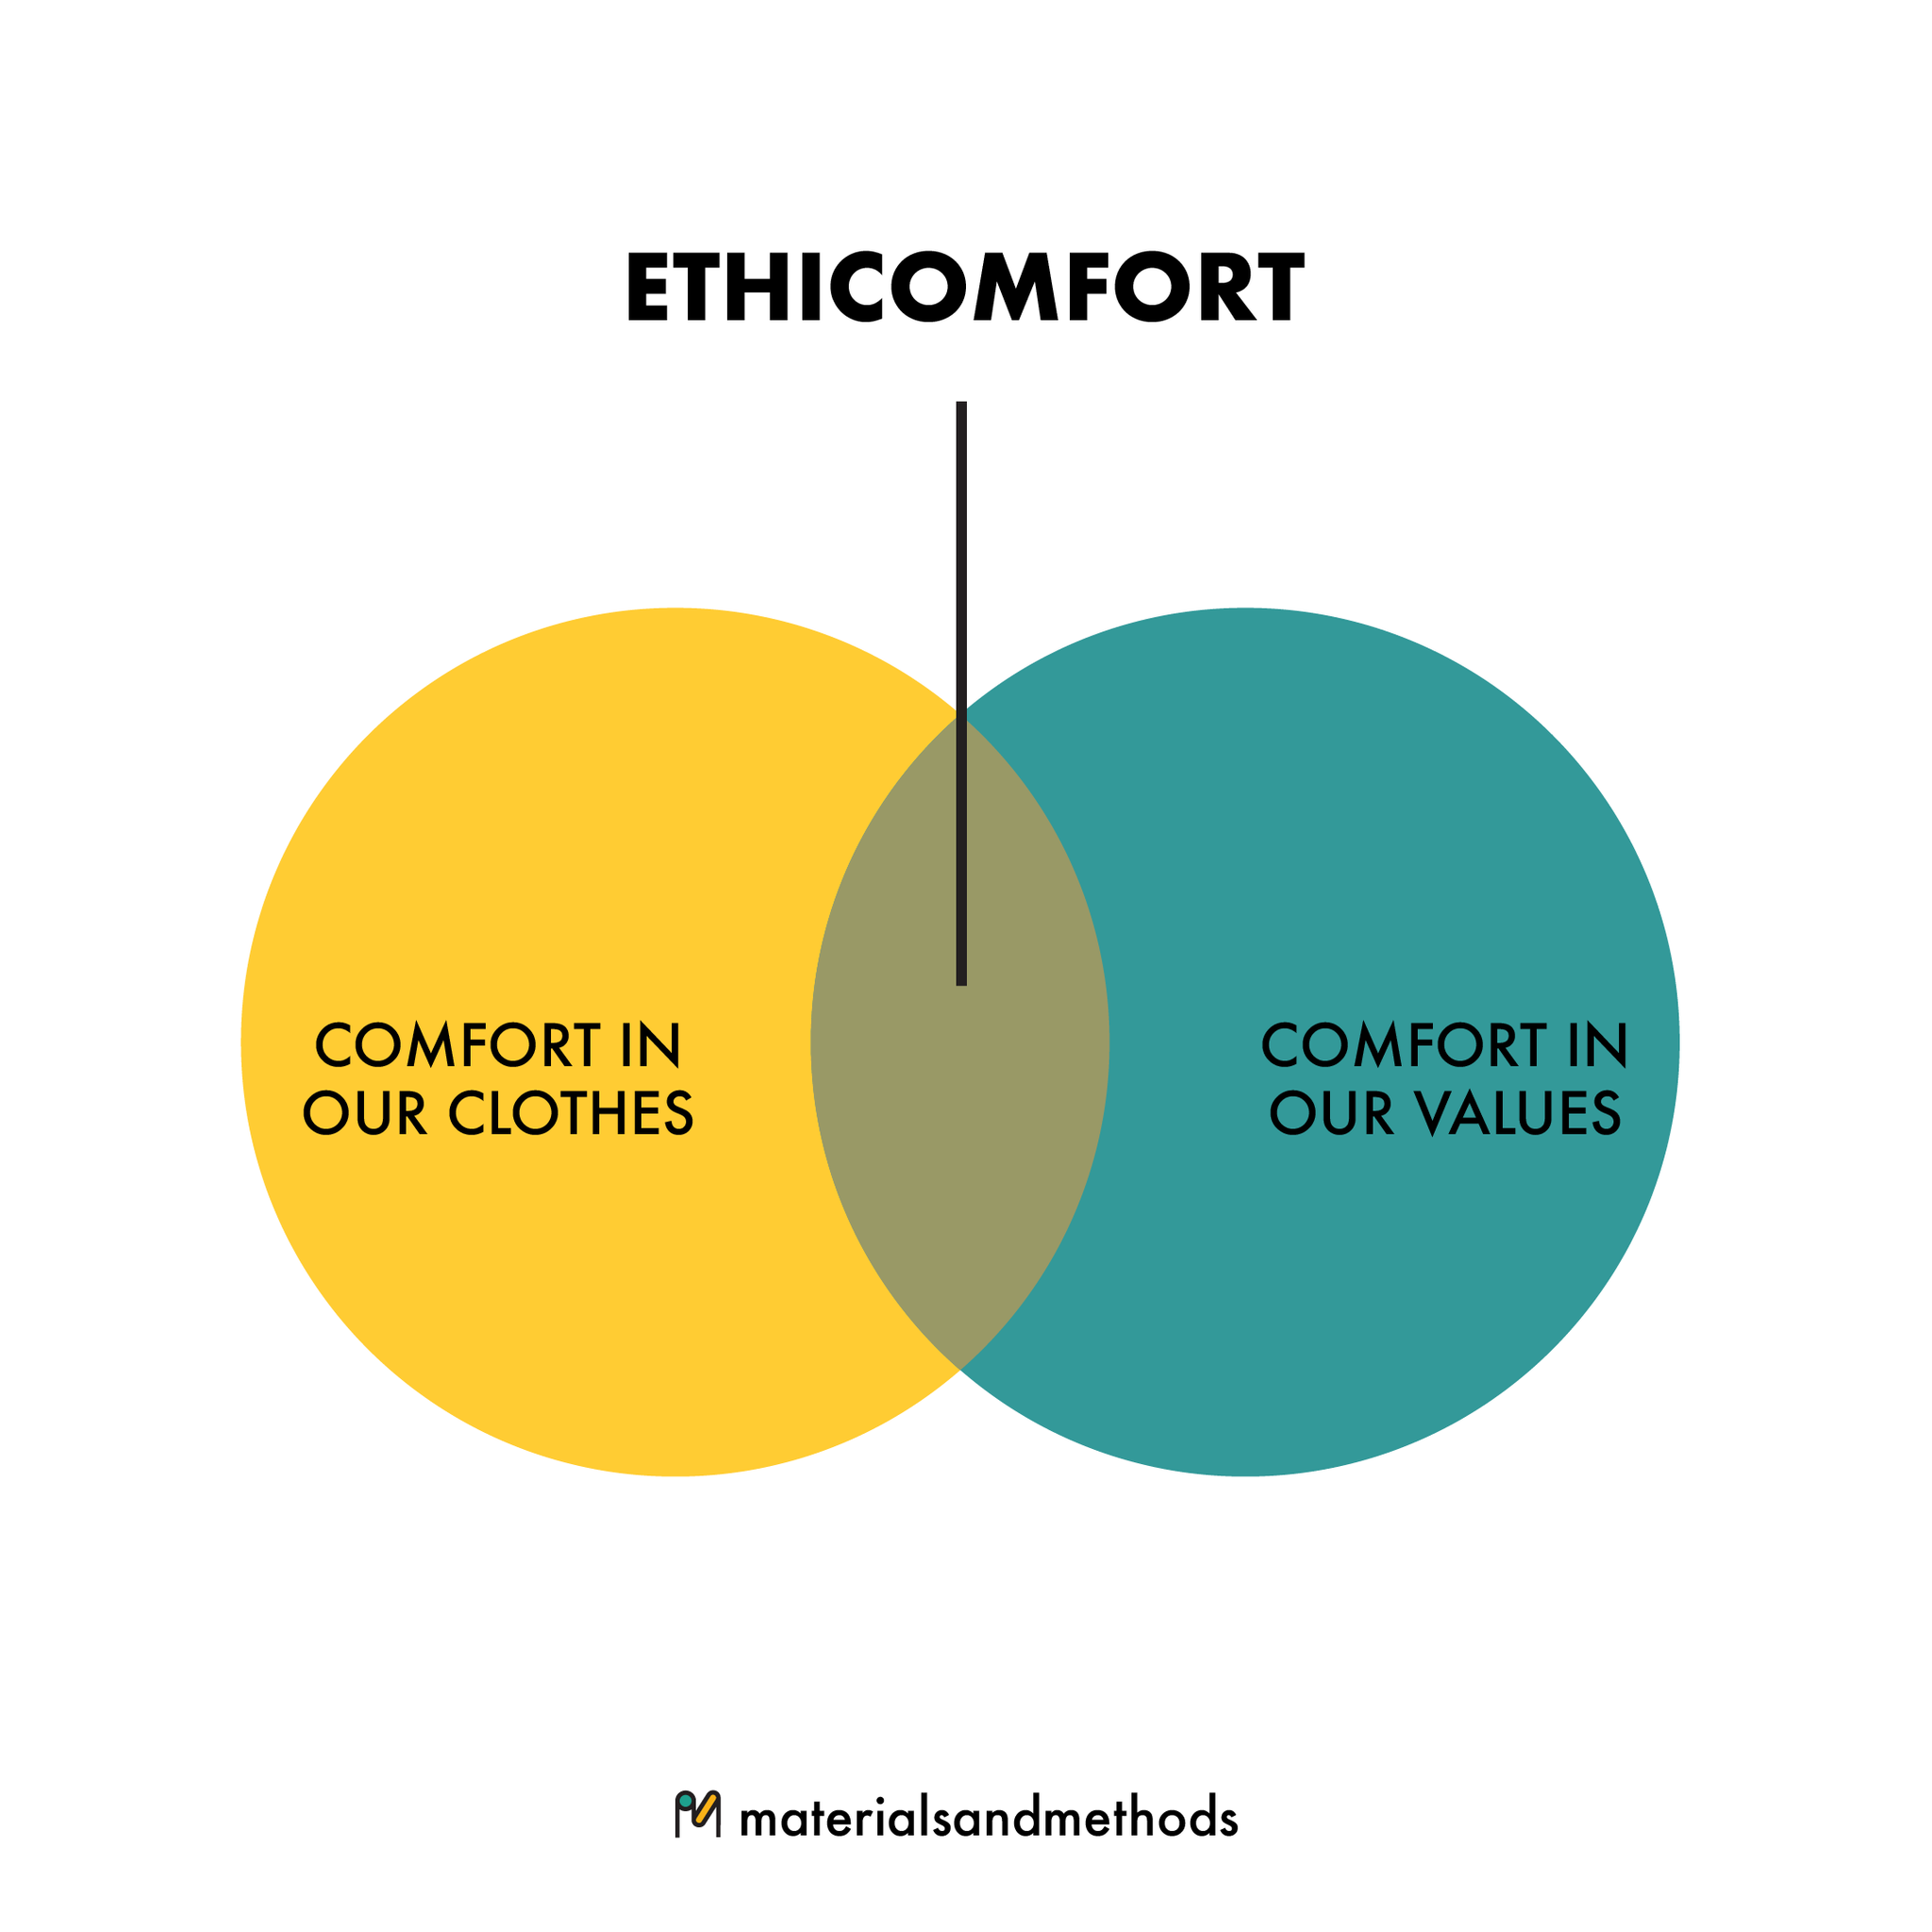 Ethicomfort